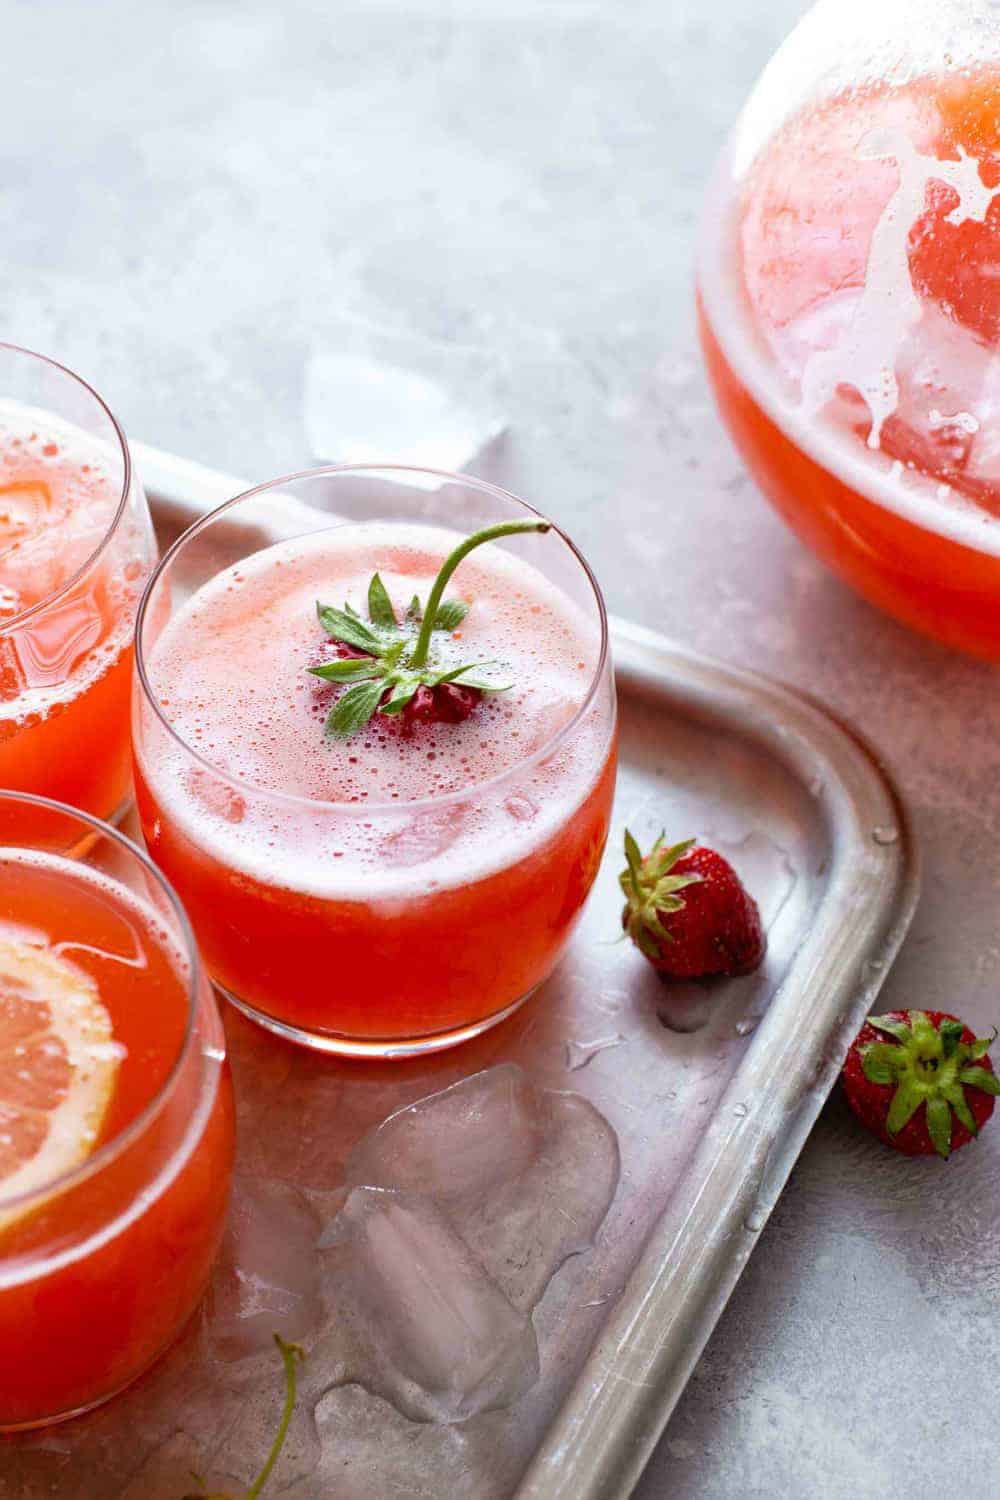 Glasses of strawberry lemonade next to a pitcher of strawberry lemonade